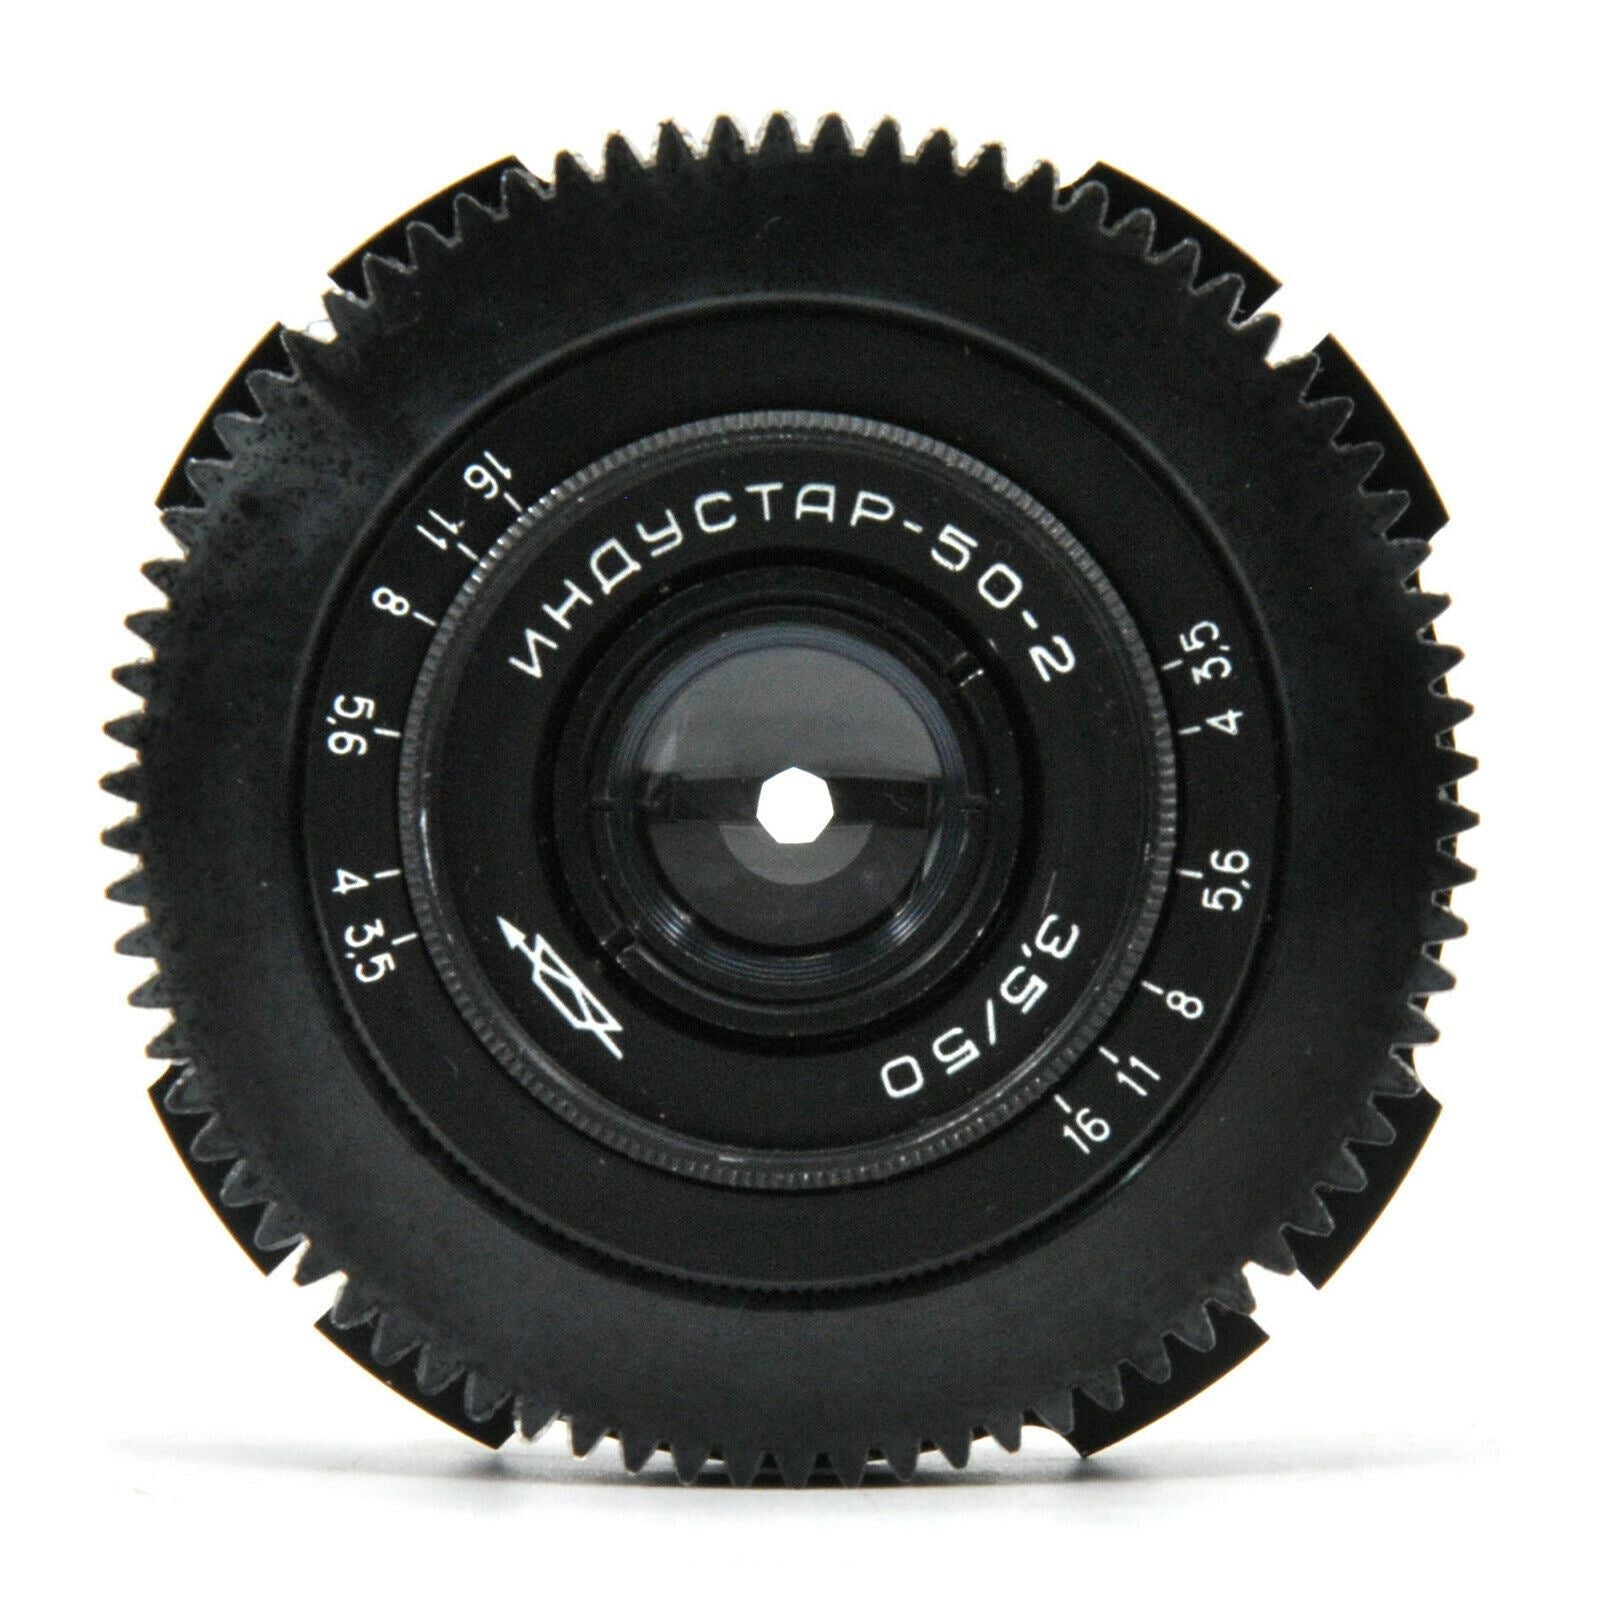 Industar-50-2 50mm F3.5